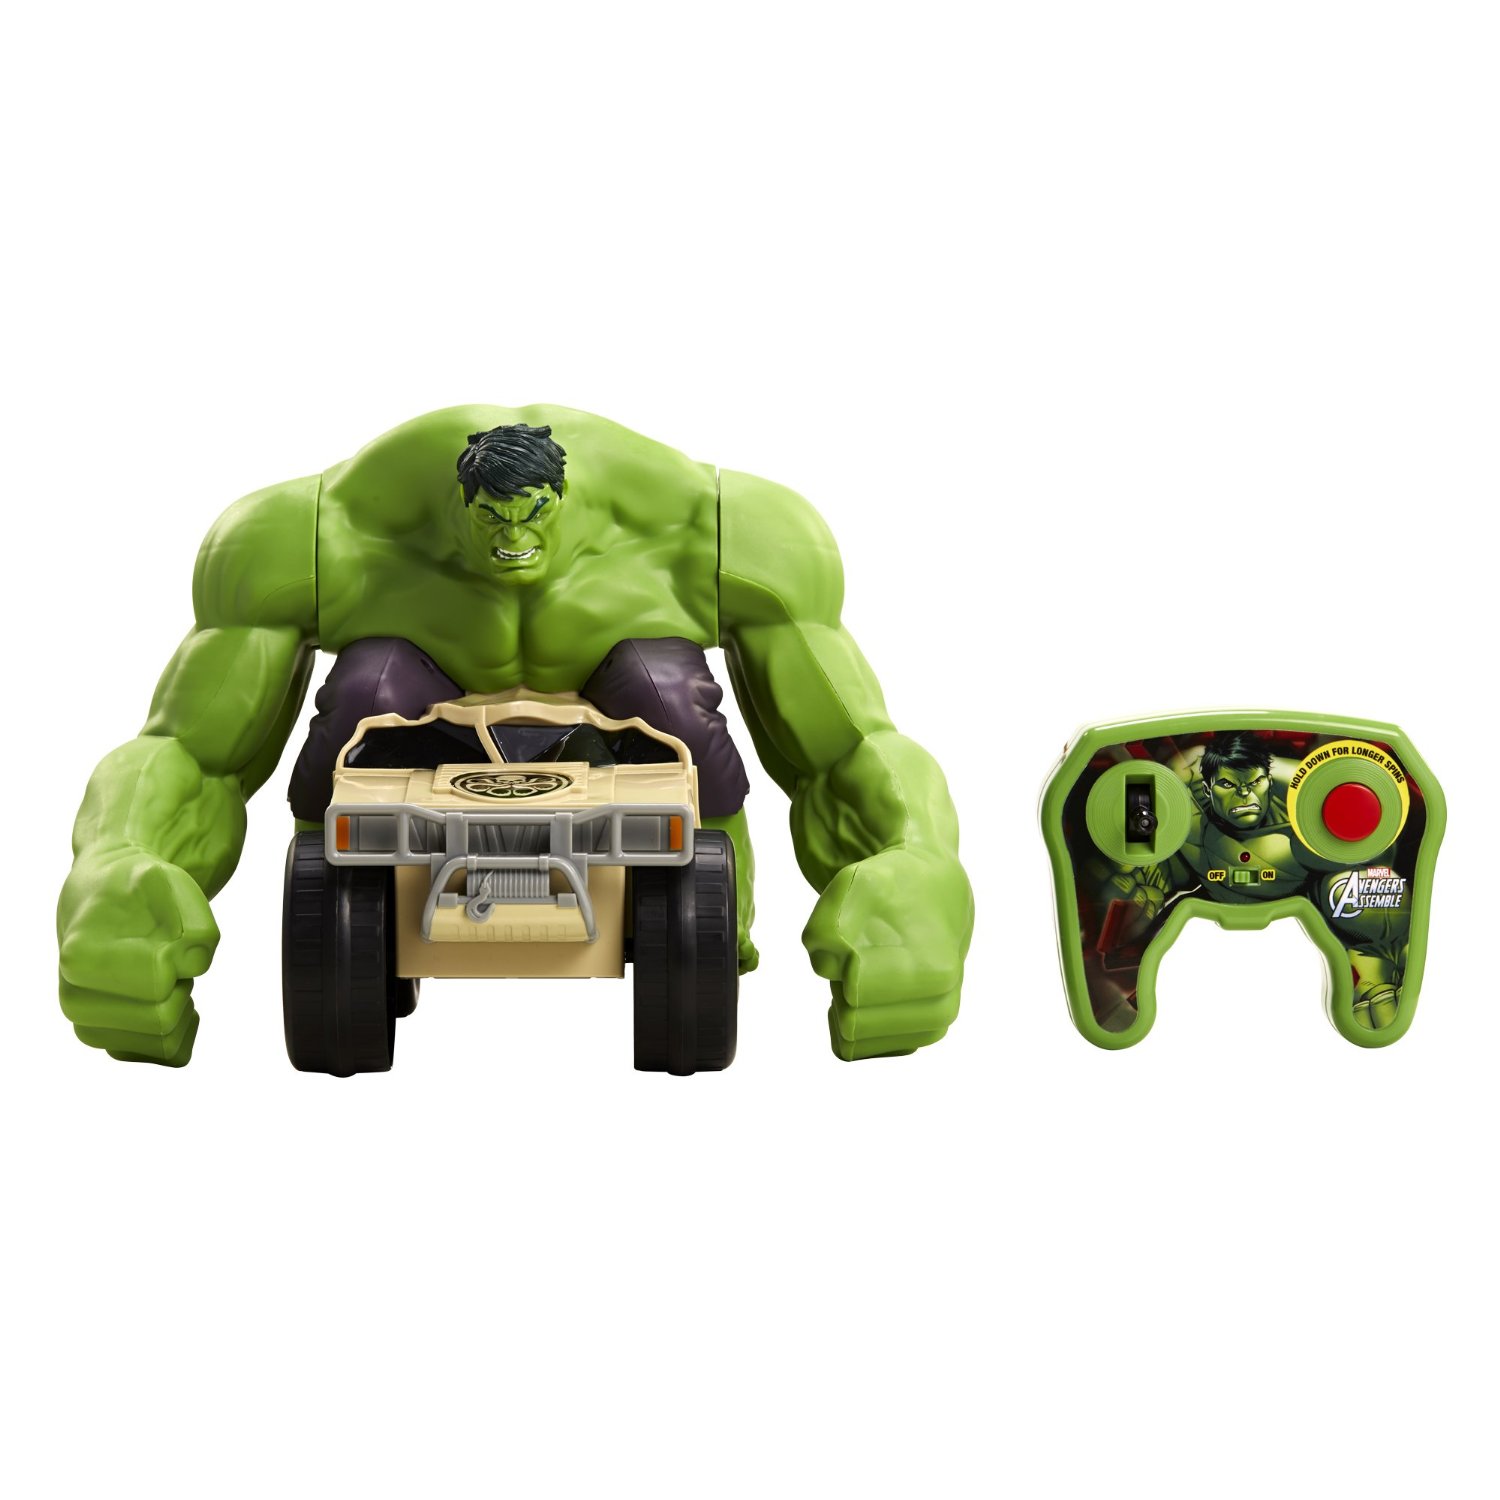 Marvel Remote Control Hulk Smash Vehicle